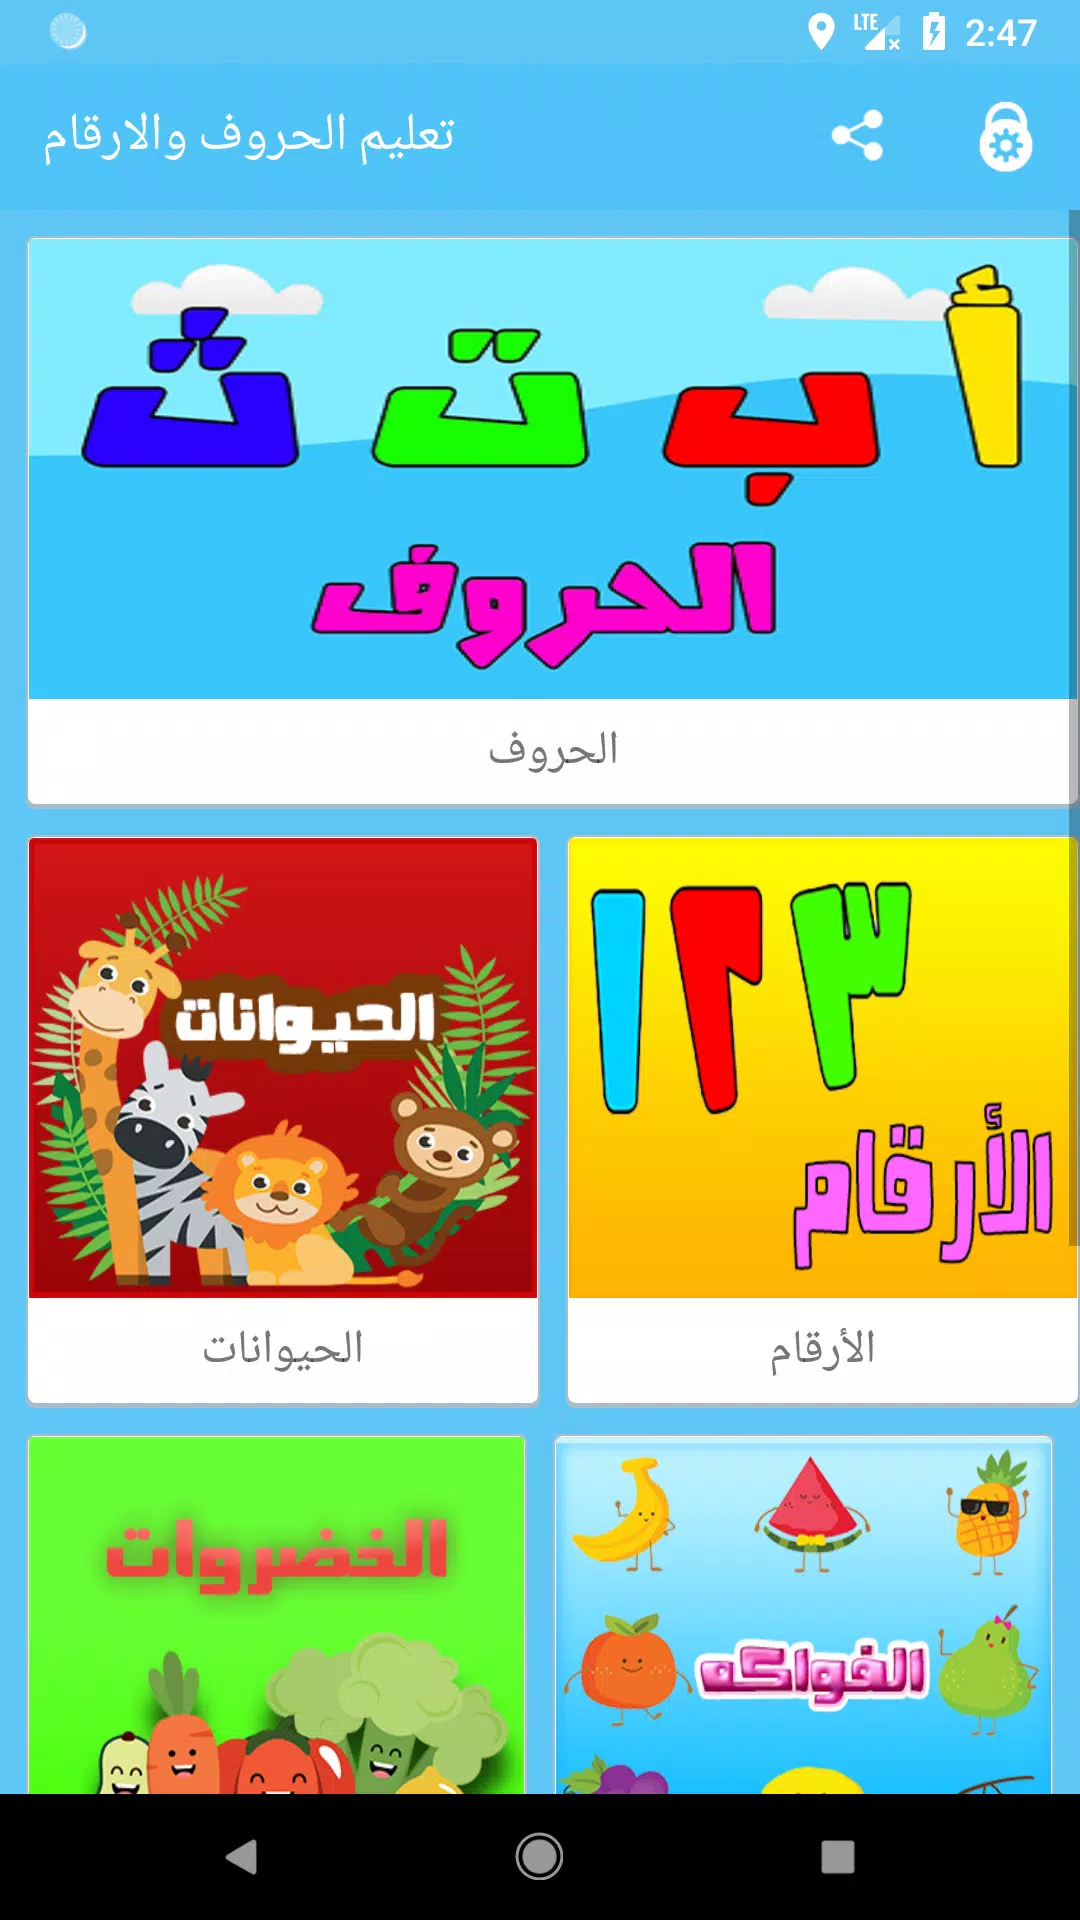 Descarga de APK de تعليم الحروف العربية والارقام والالوان للاطفال para  Android